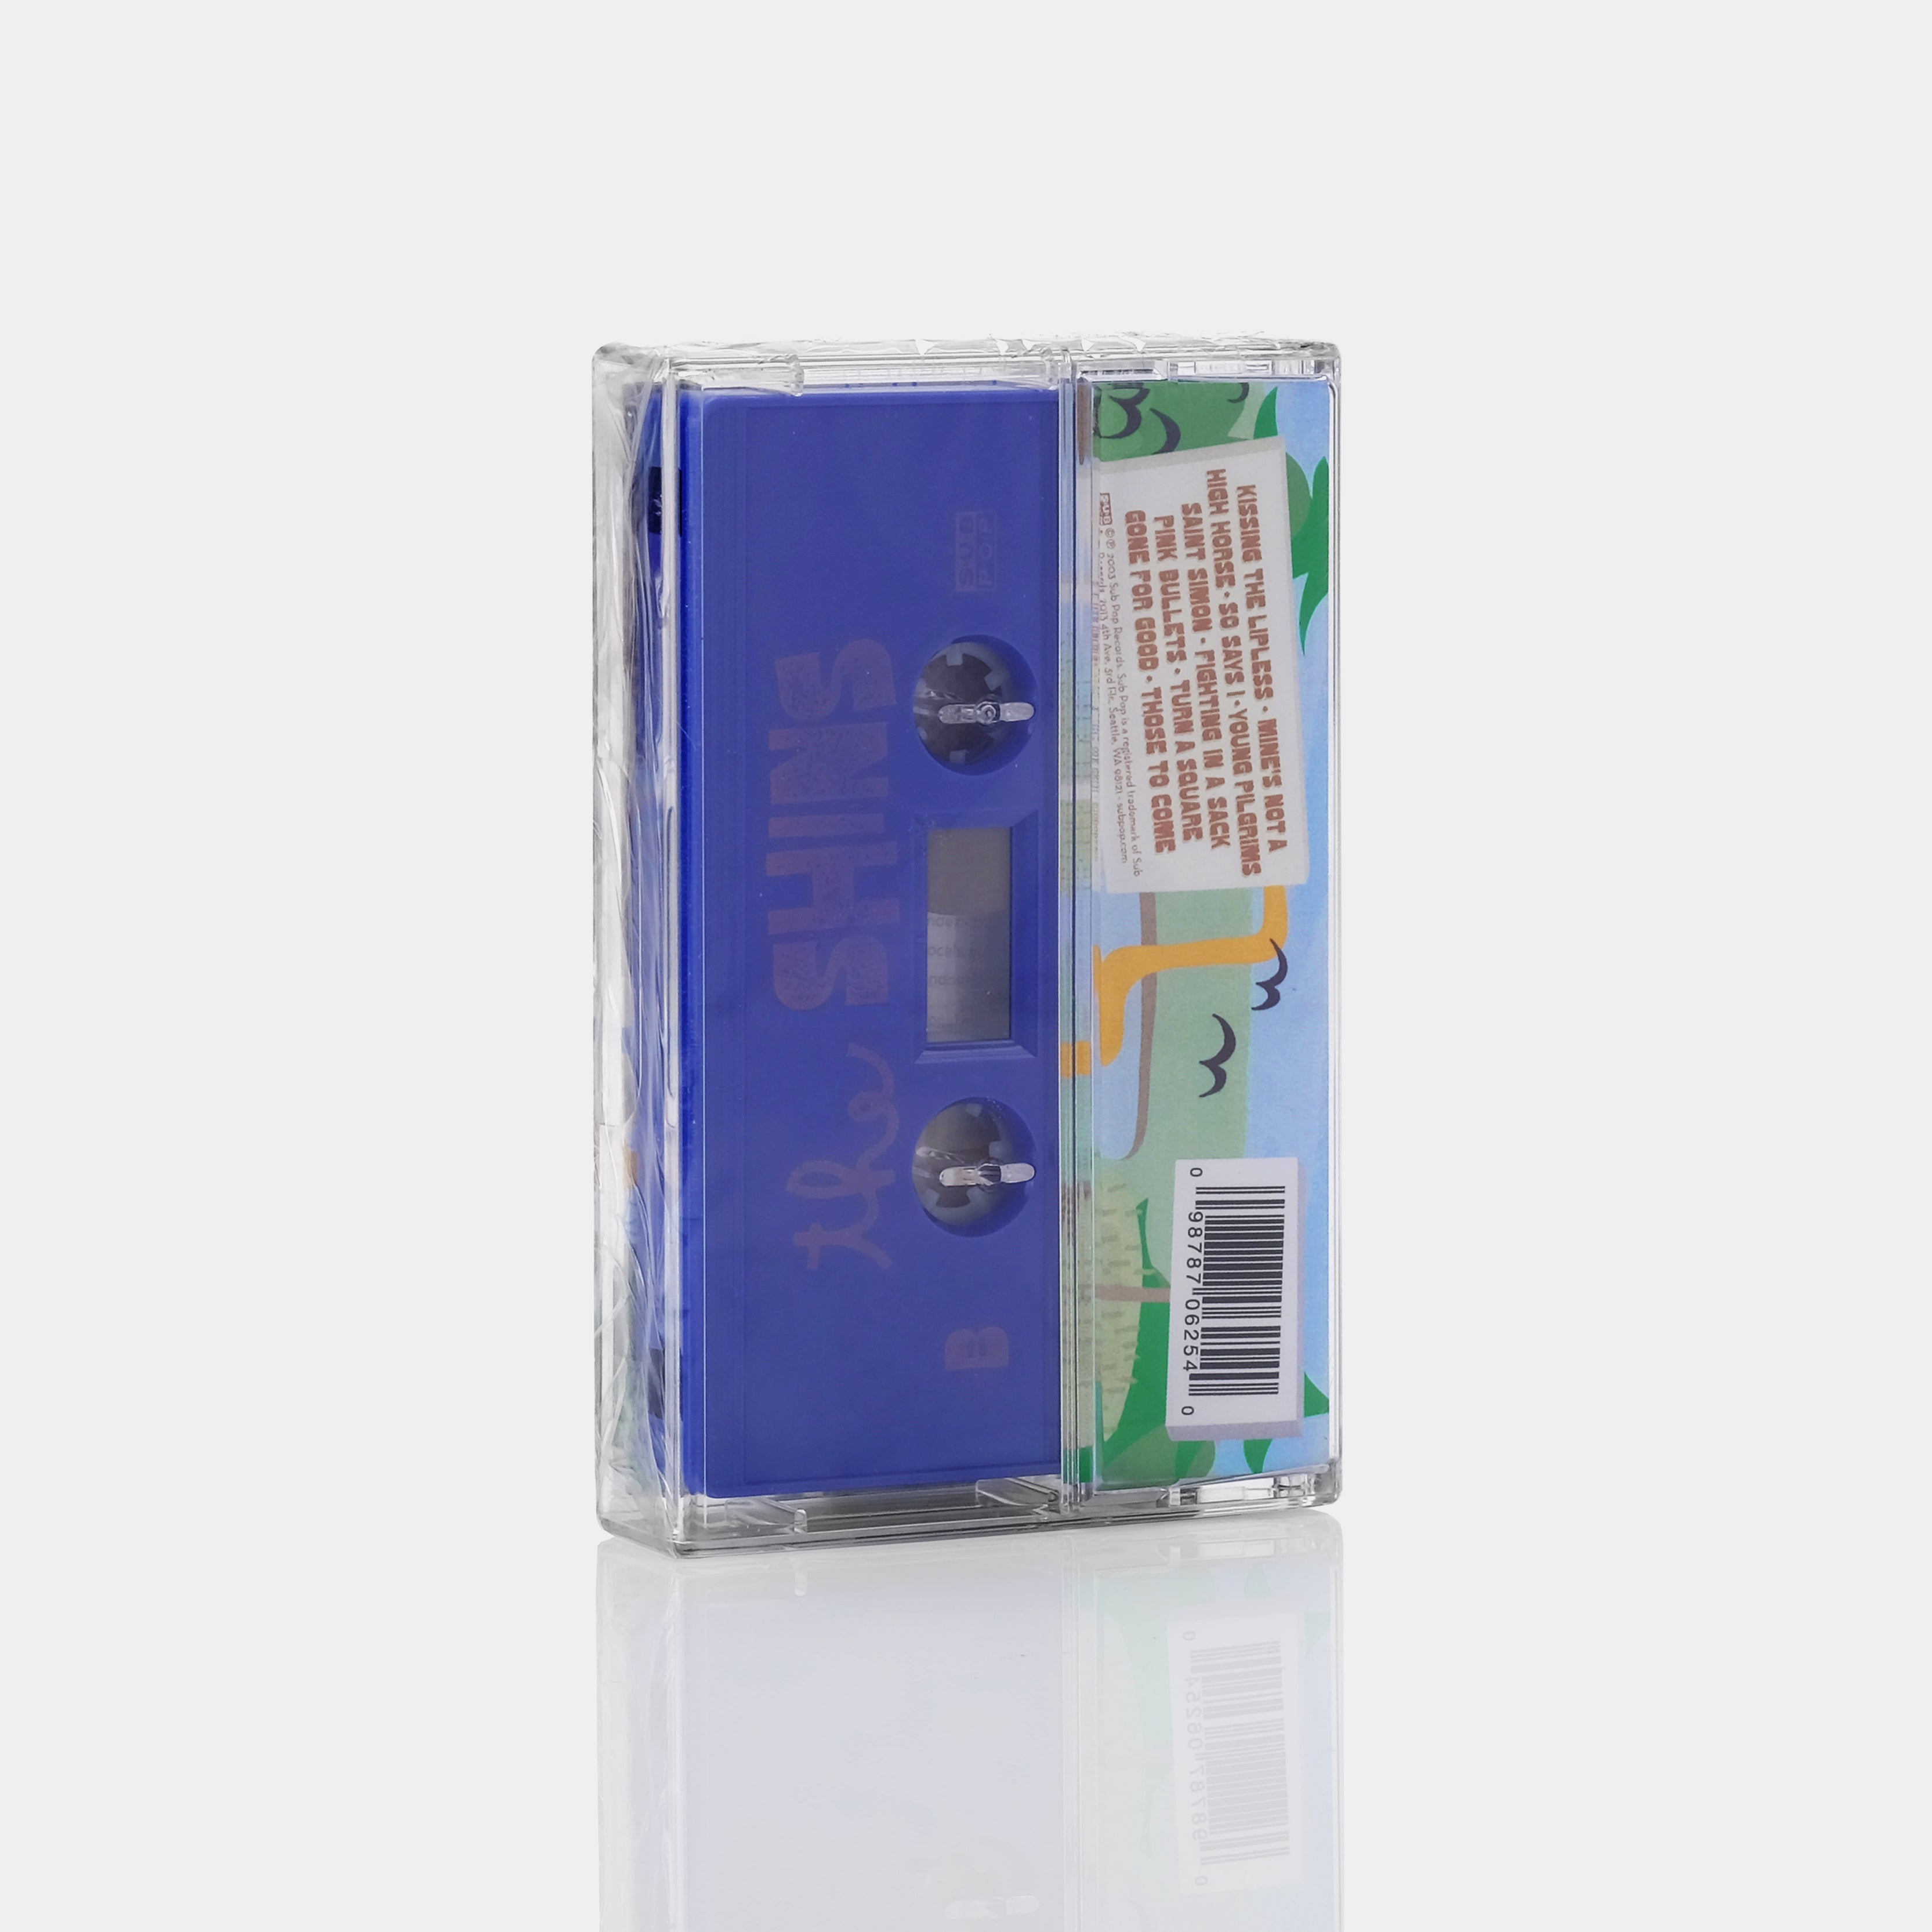 The Shins - Chutes Too Narrow Cassette Tape